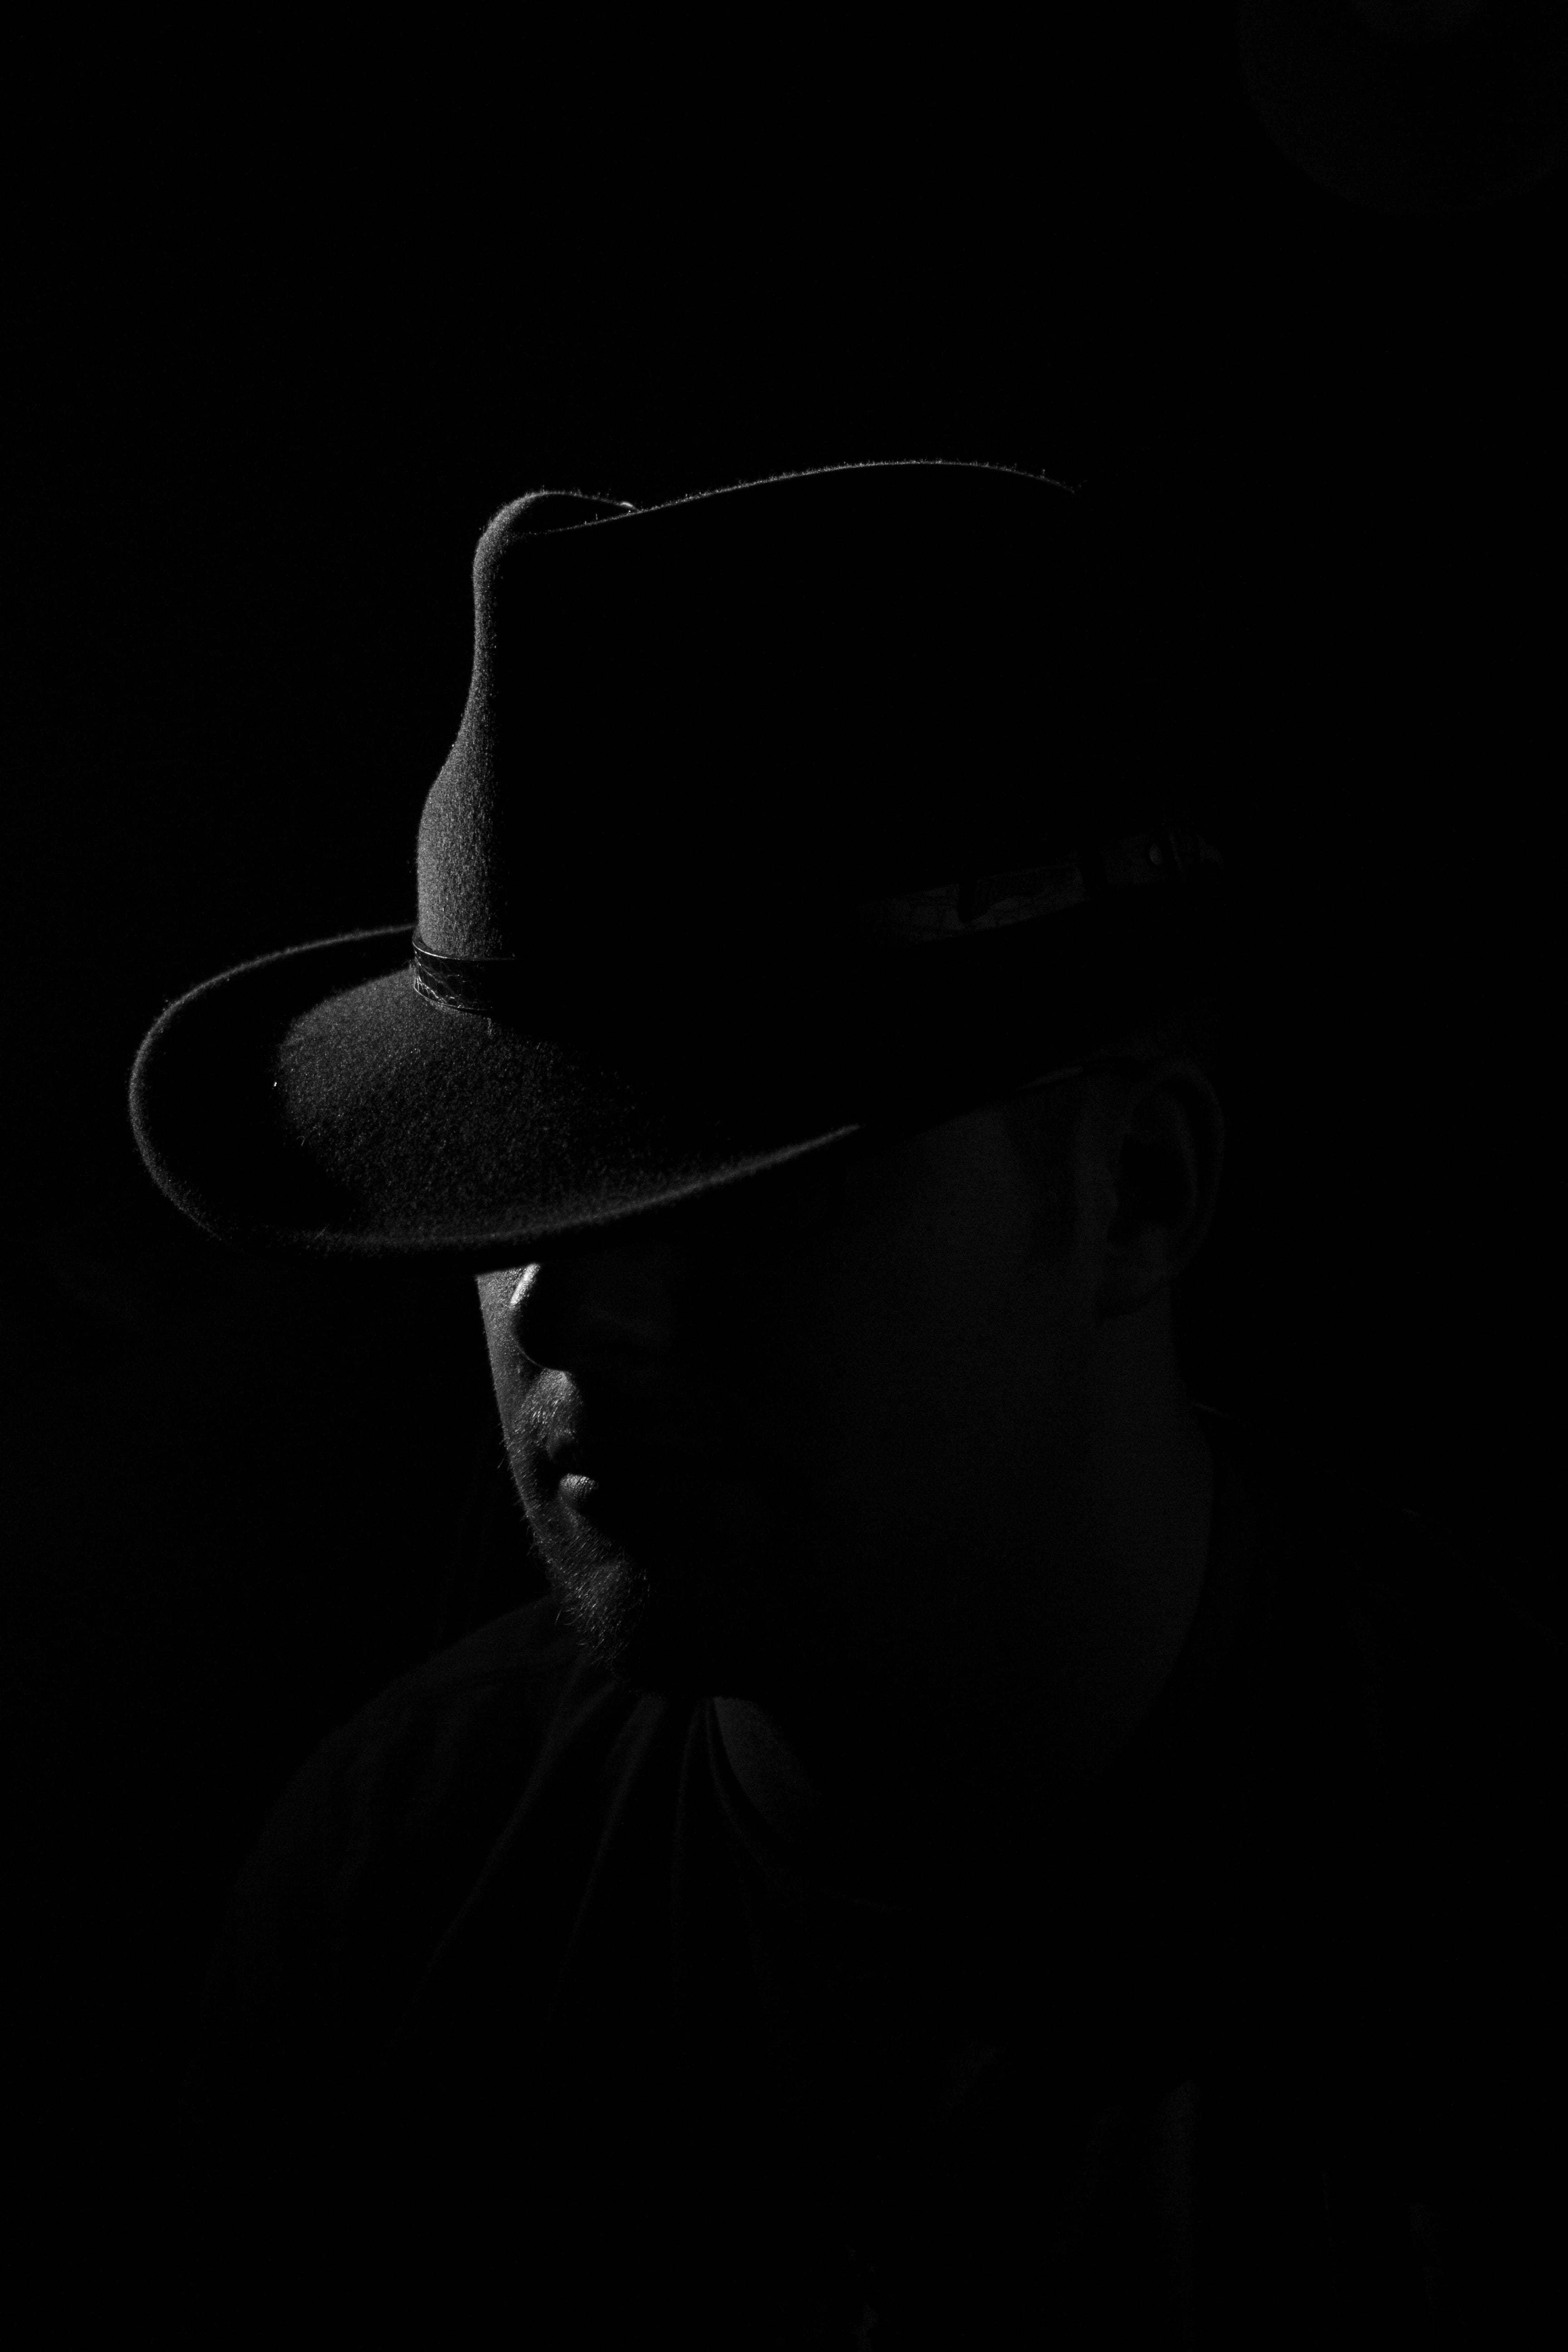 man wearing black hat, apparel, clothing, person, human, sun hat